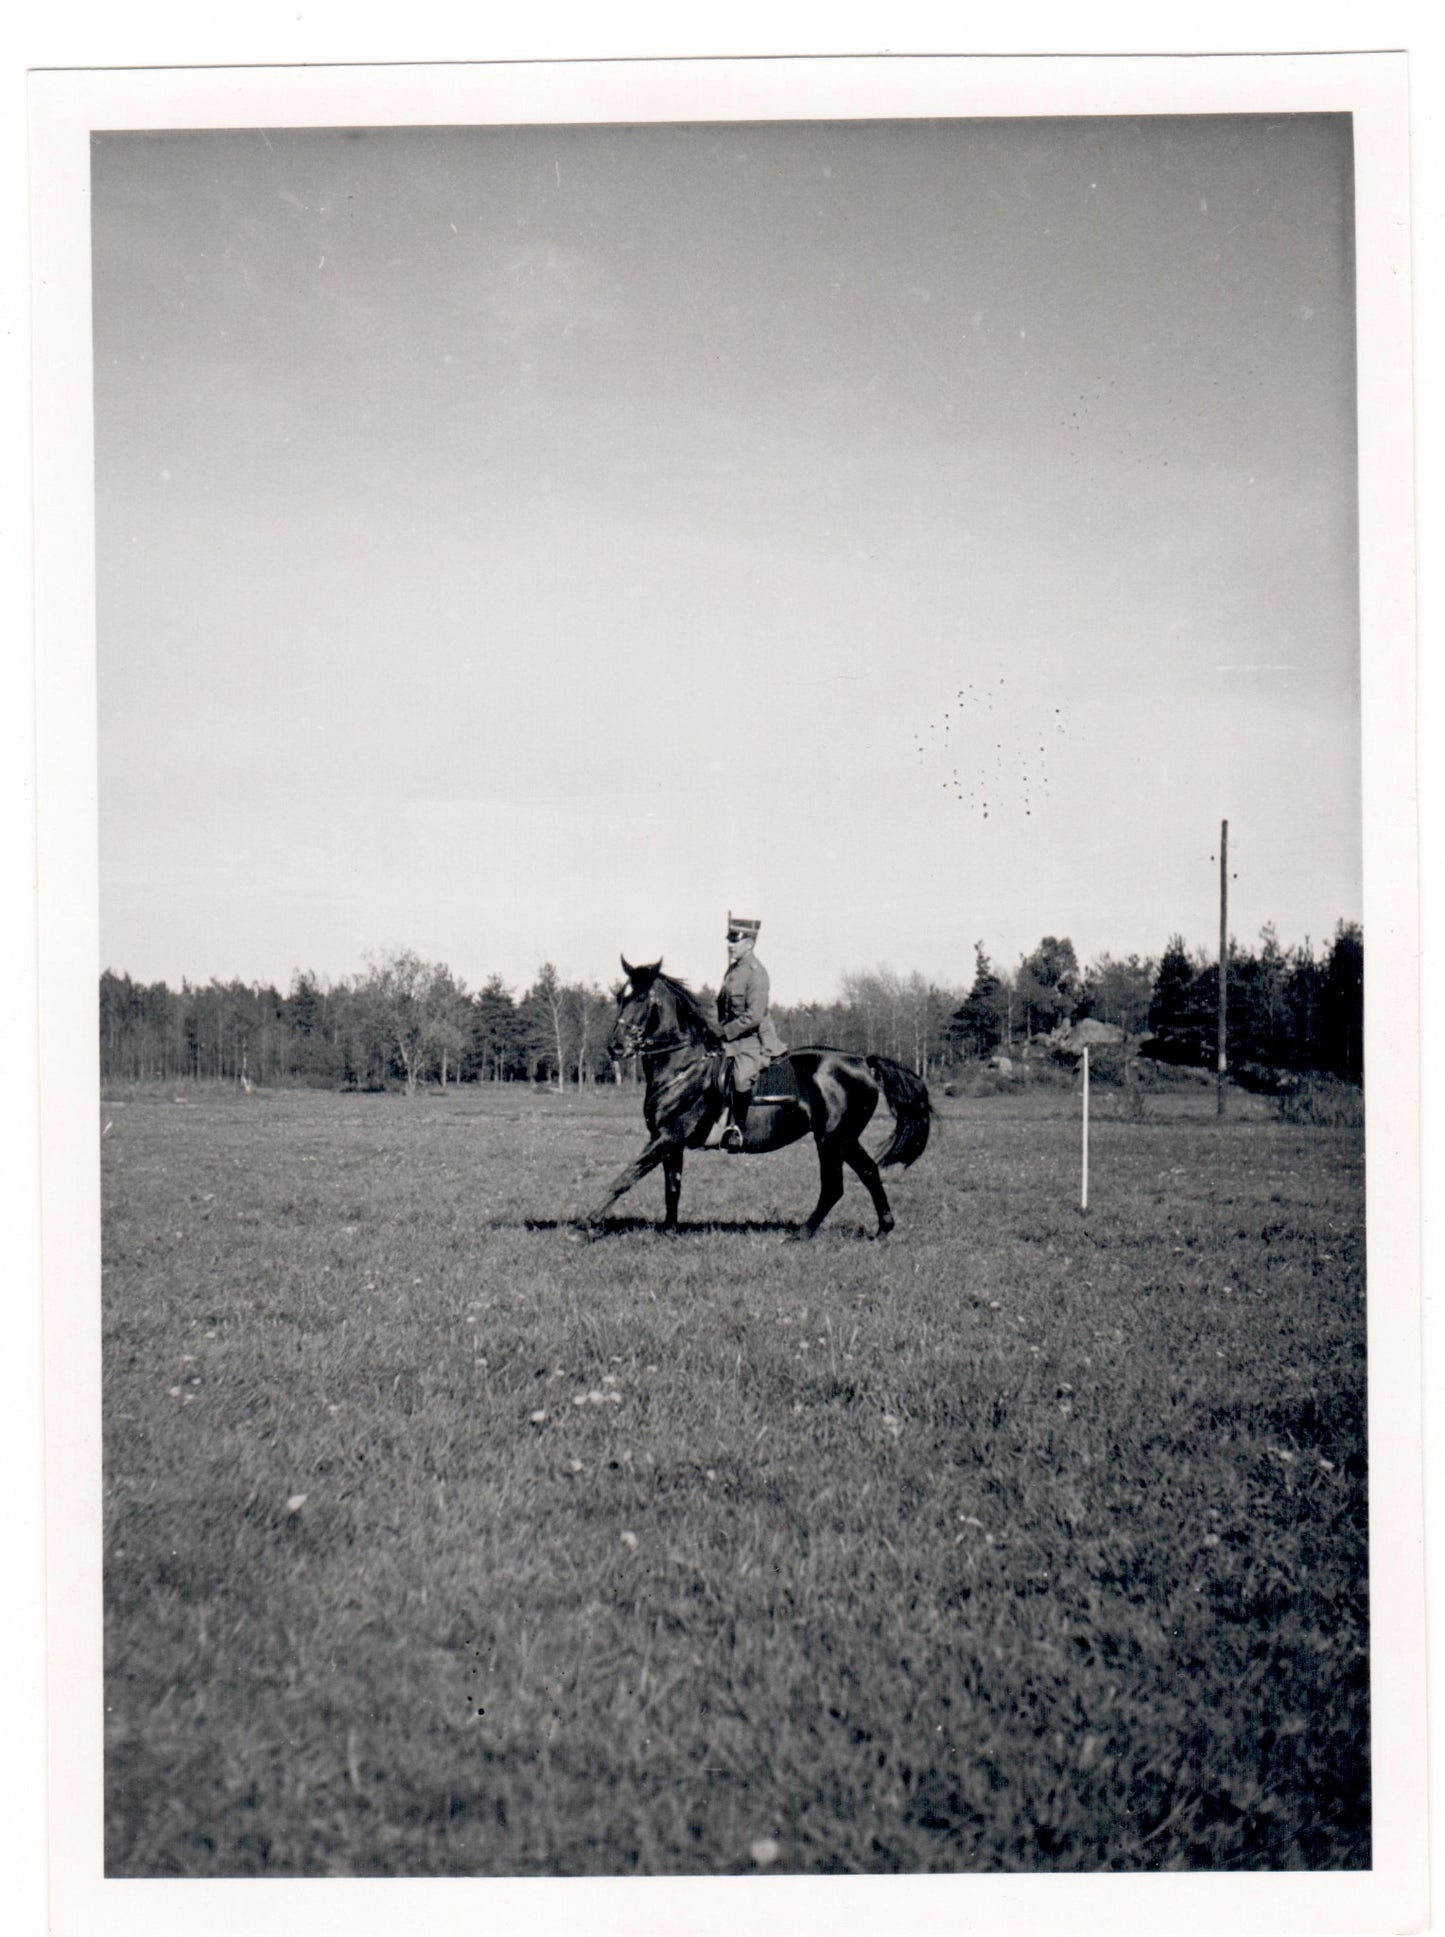 Vintage Photo - Dressage - Equestrian Sports - Officers - Man on Horse - Sweden